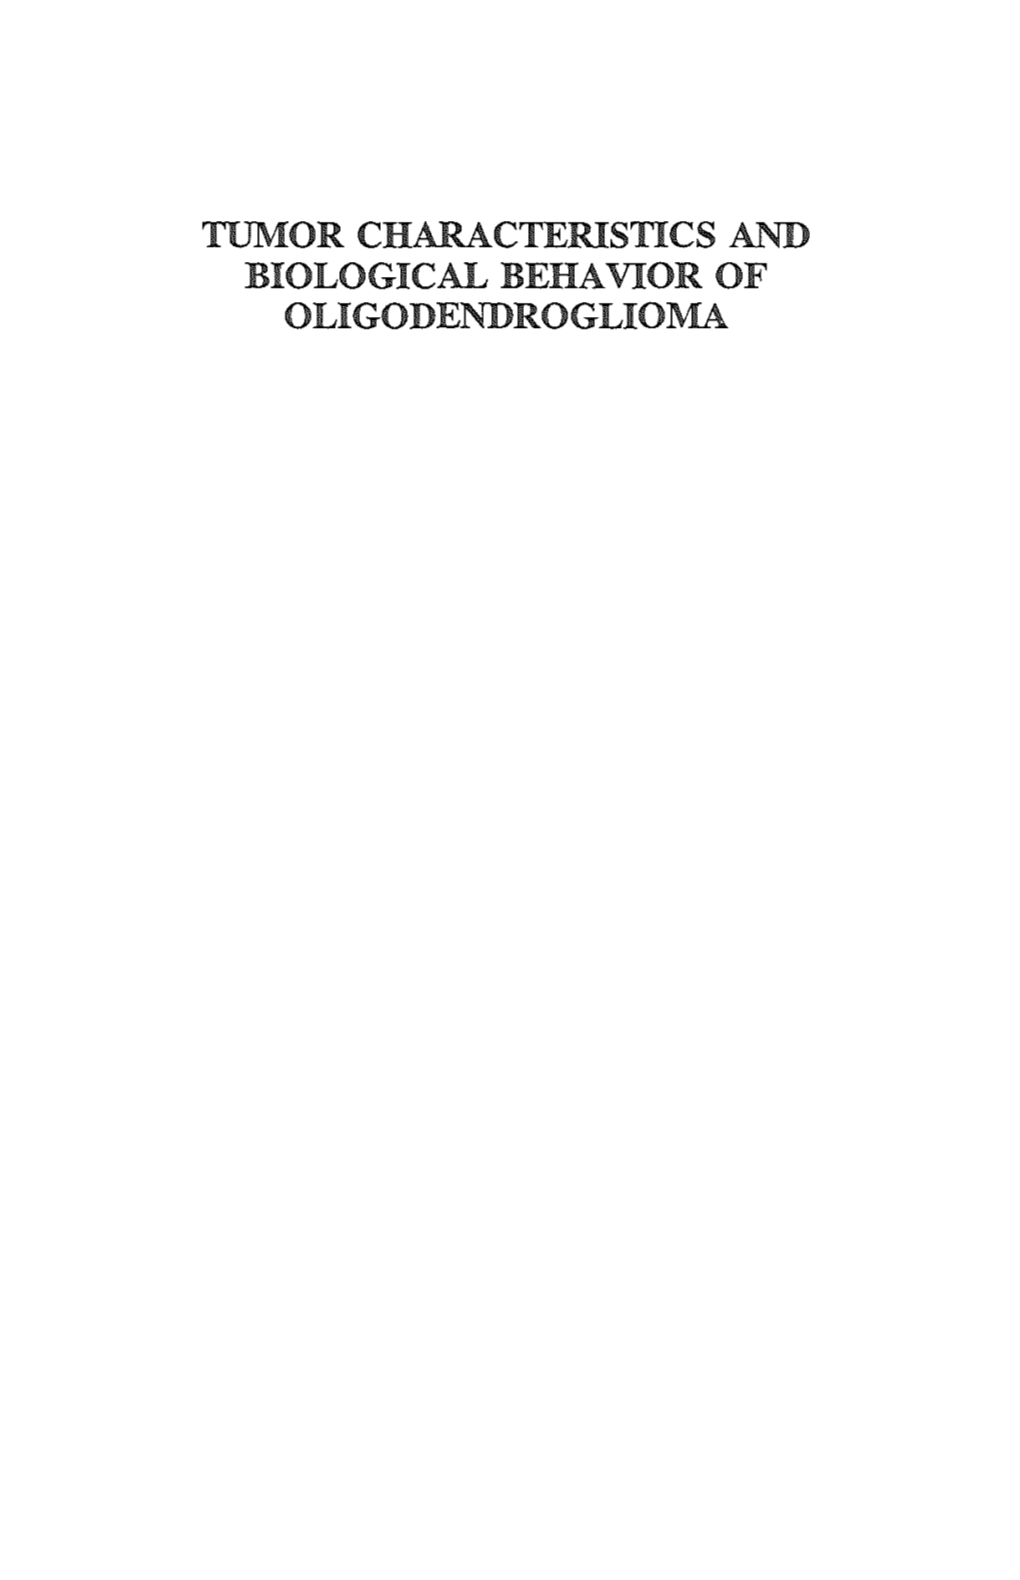 Tumorcharacteidsticsand Biological Behavior of Oligodendroglioma 13 :-:C"- 19:50